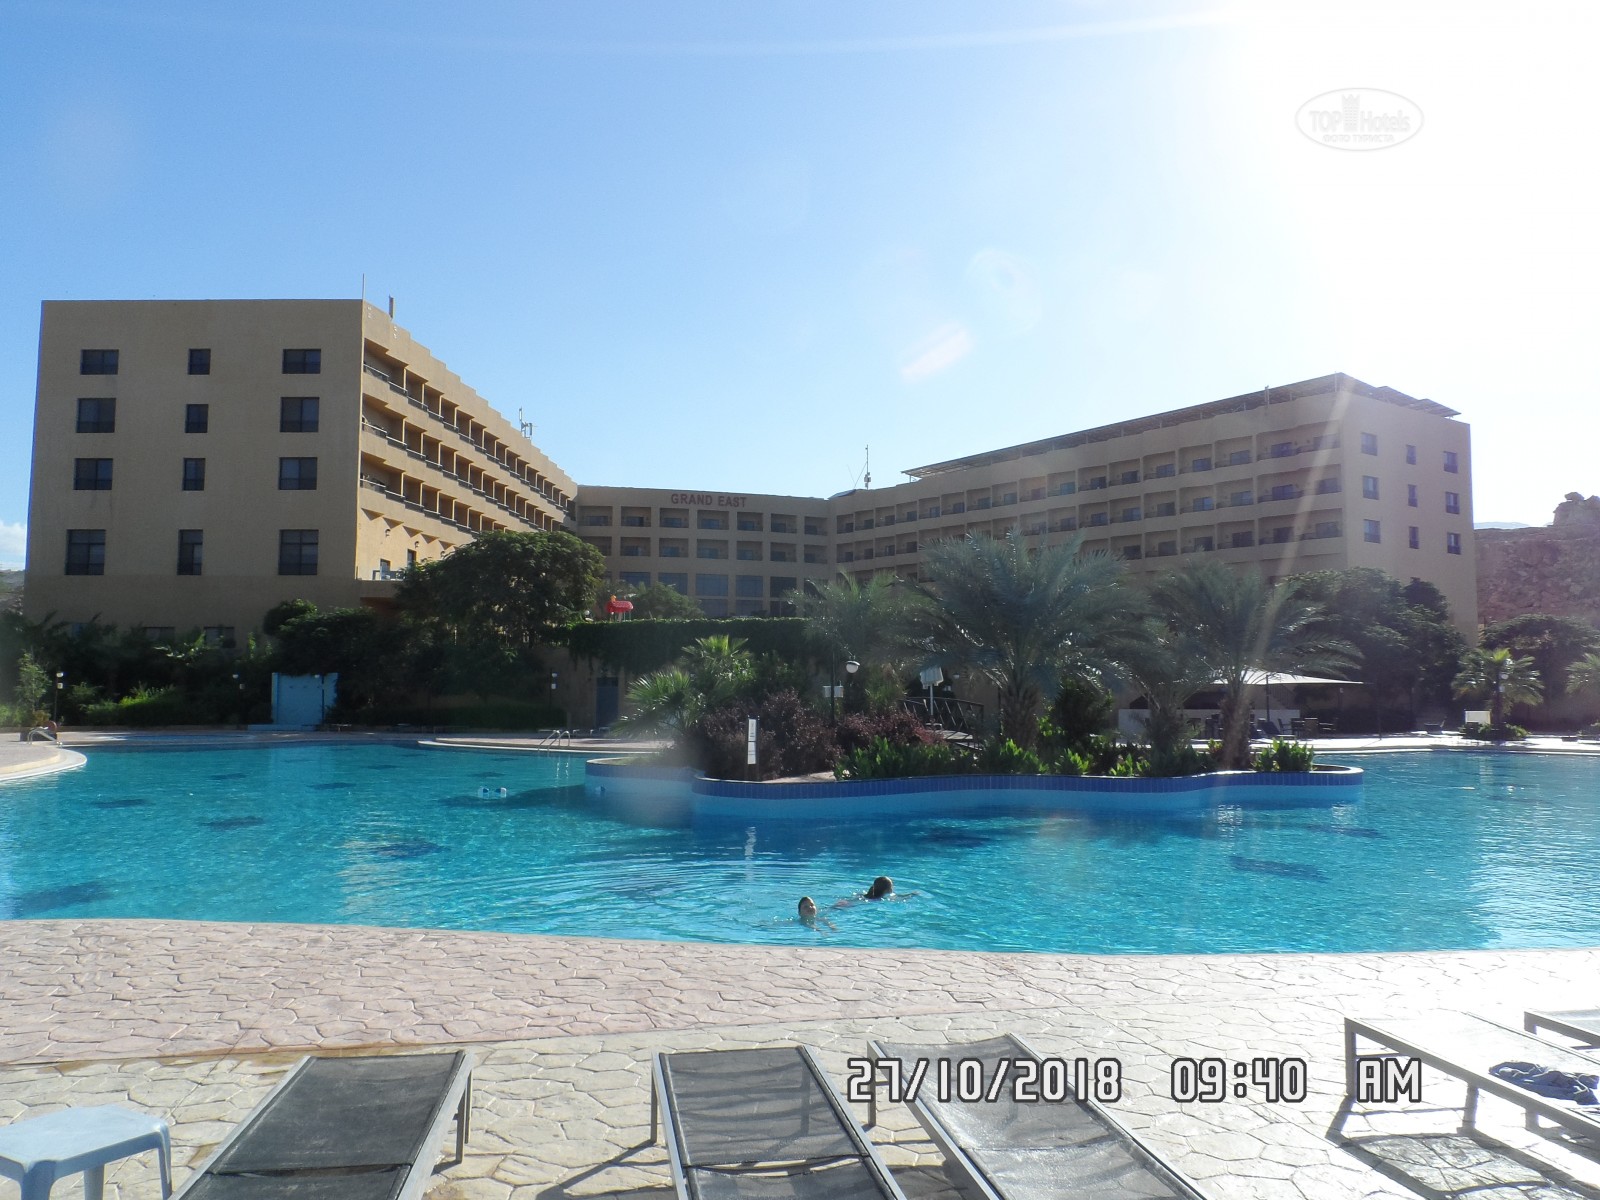 Grand East Hotel, Jordan, Dead Sea, tours, photos and reviews